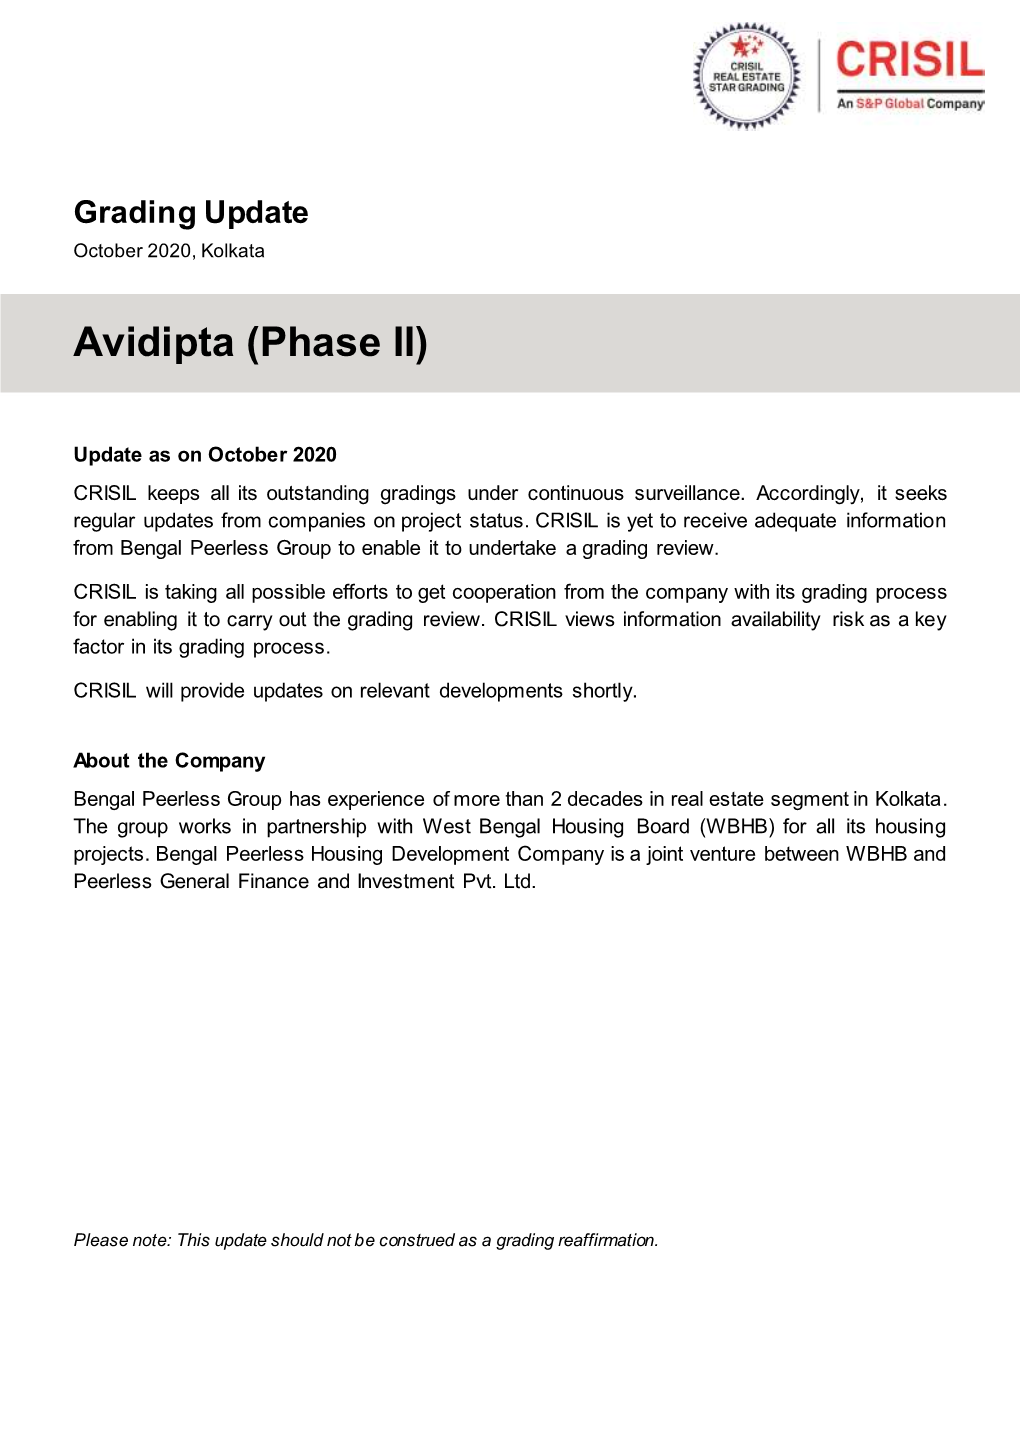 Avidipta (Phase II)